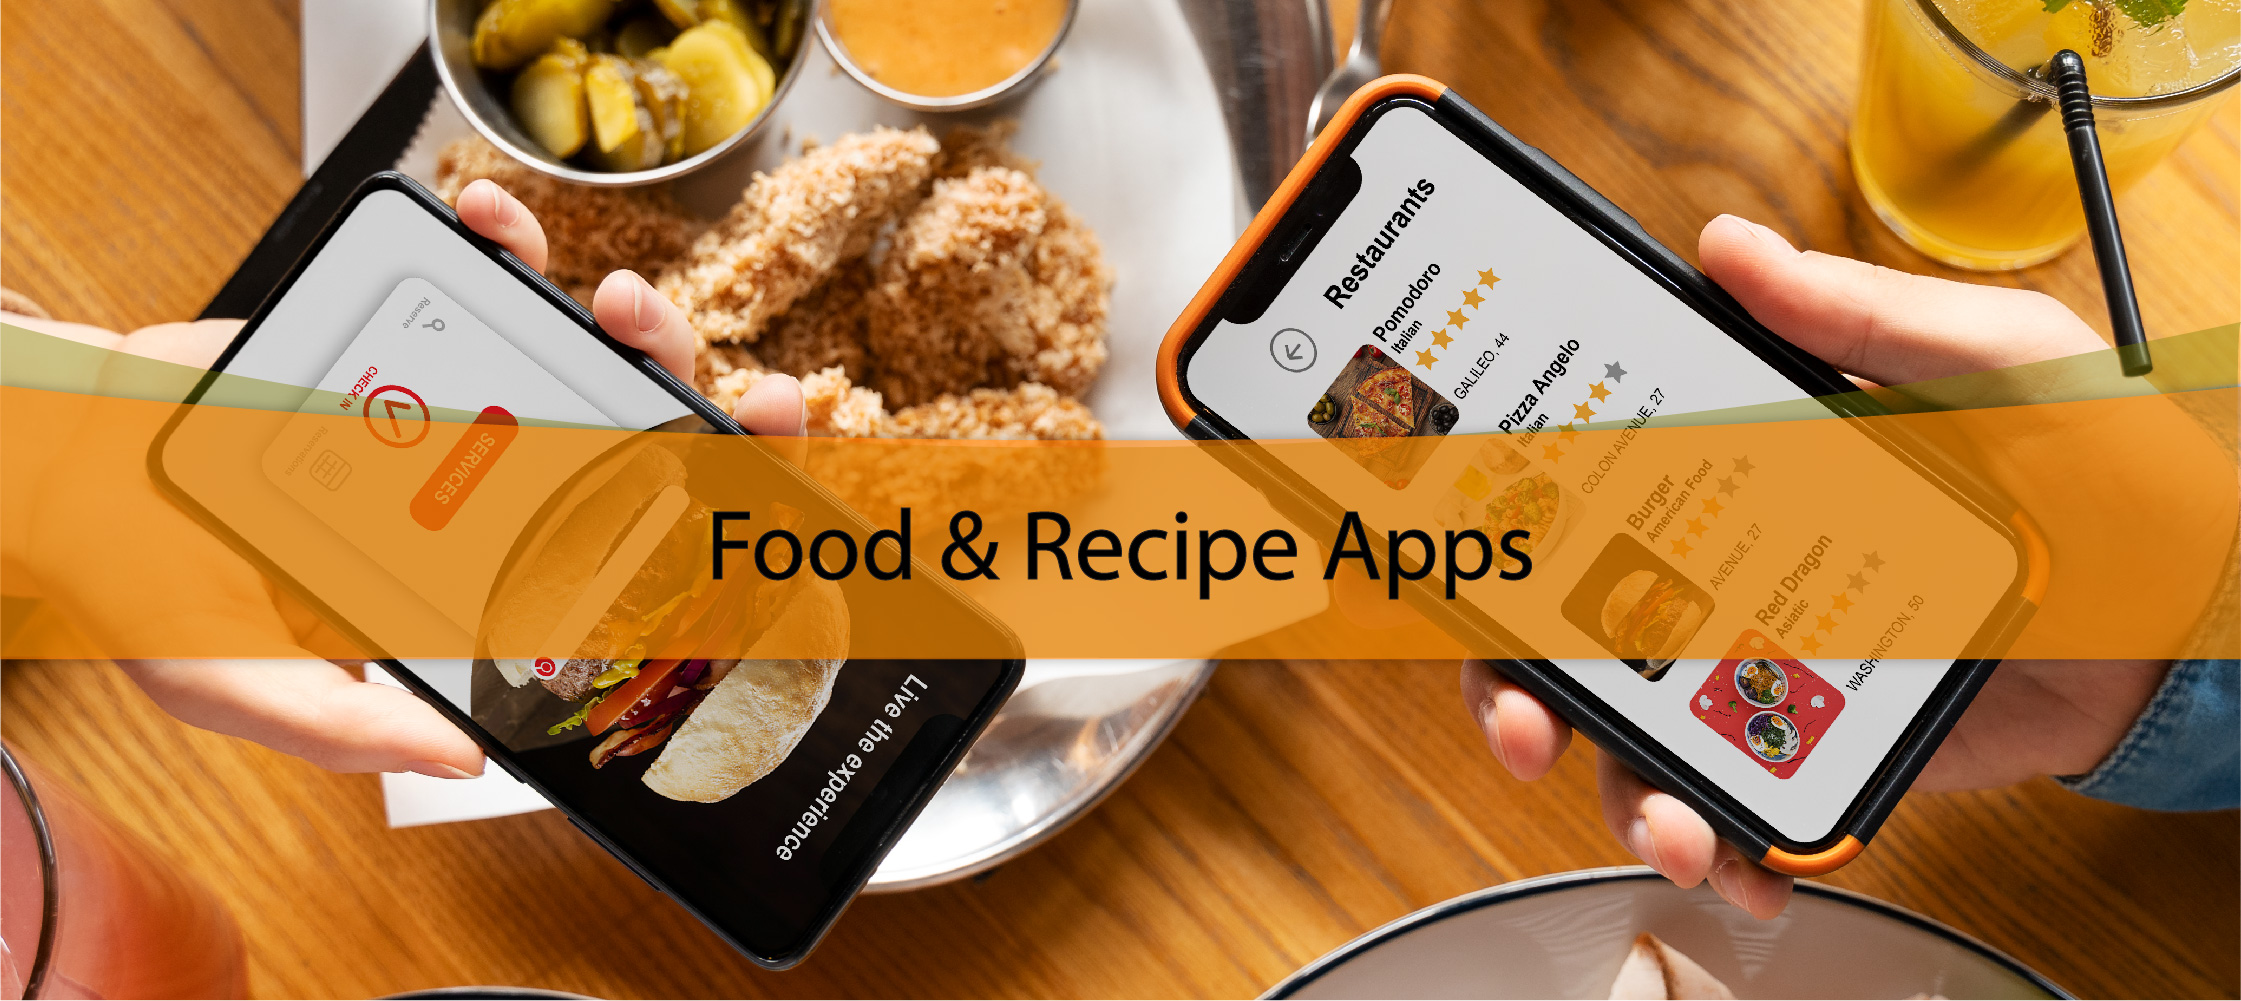 Food & Recipe Apps